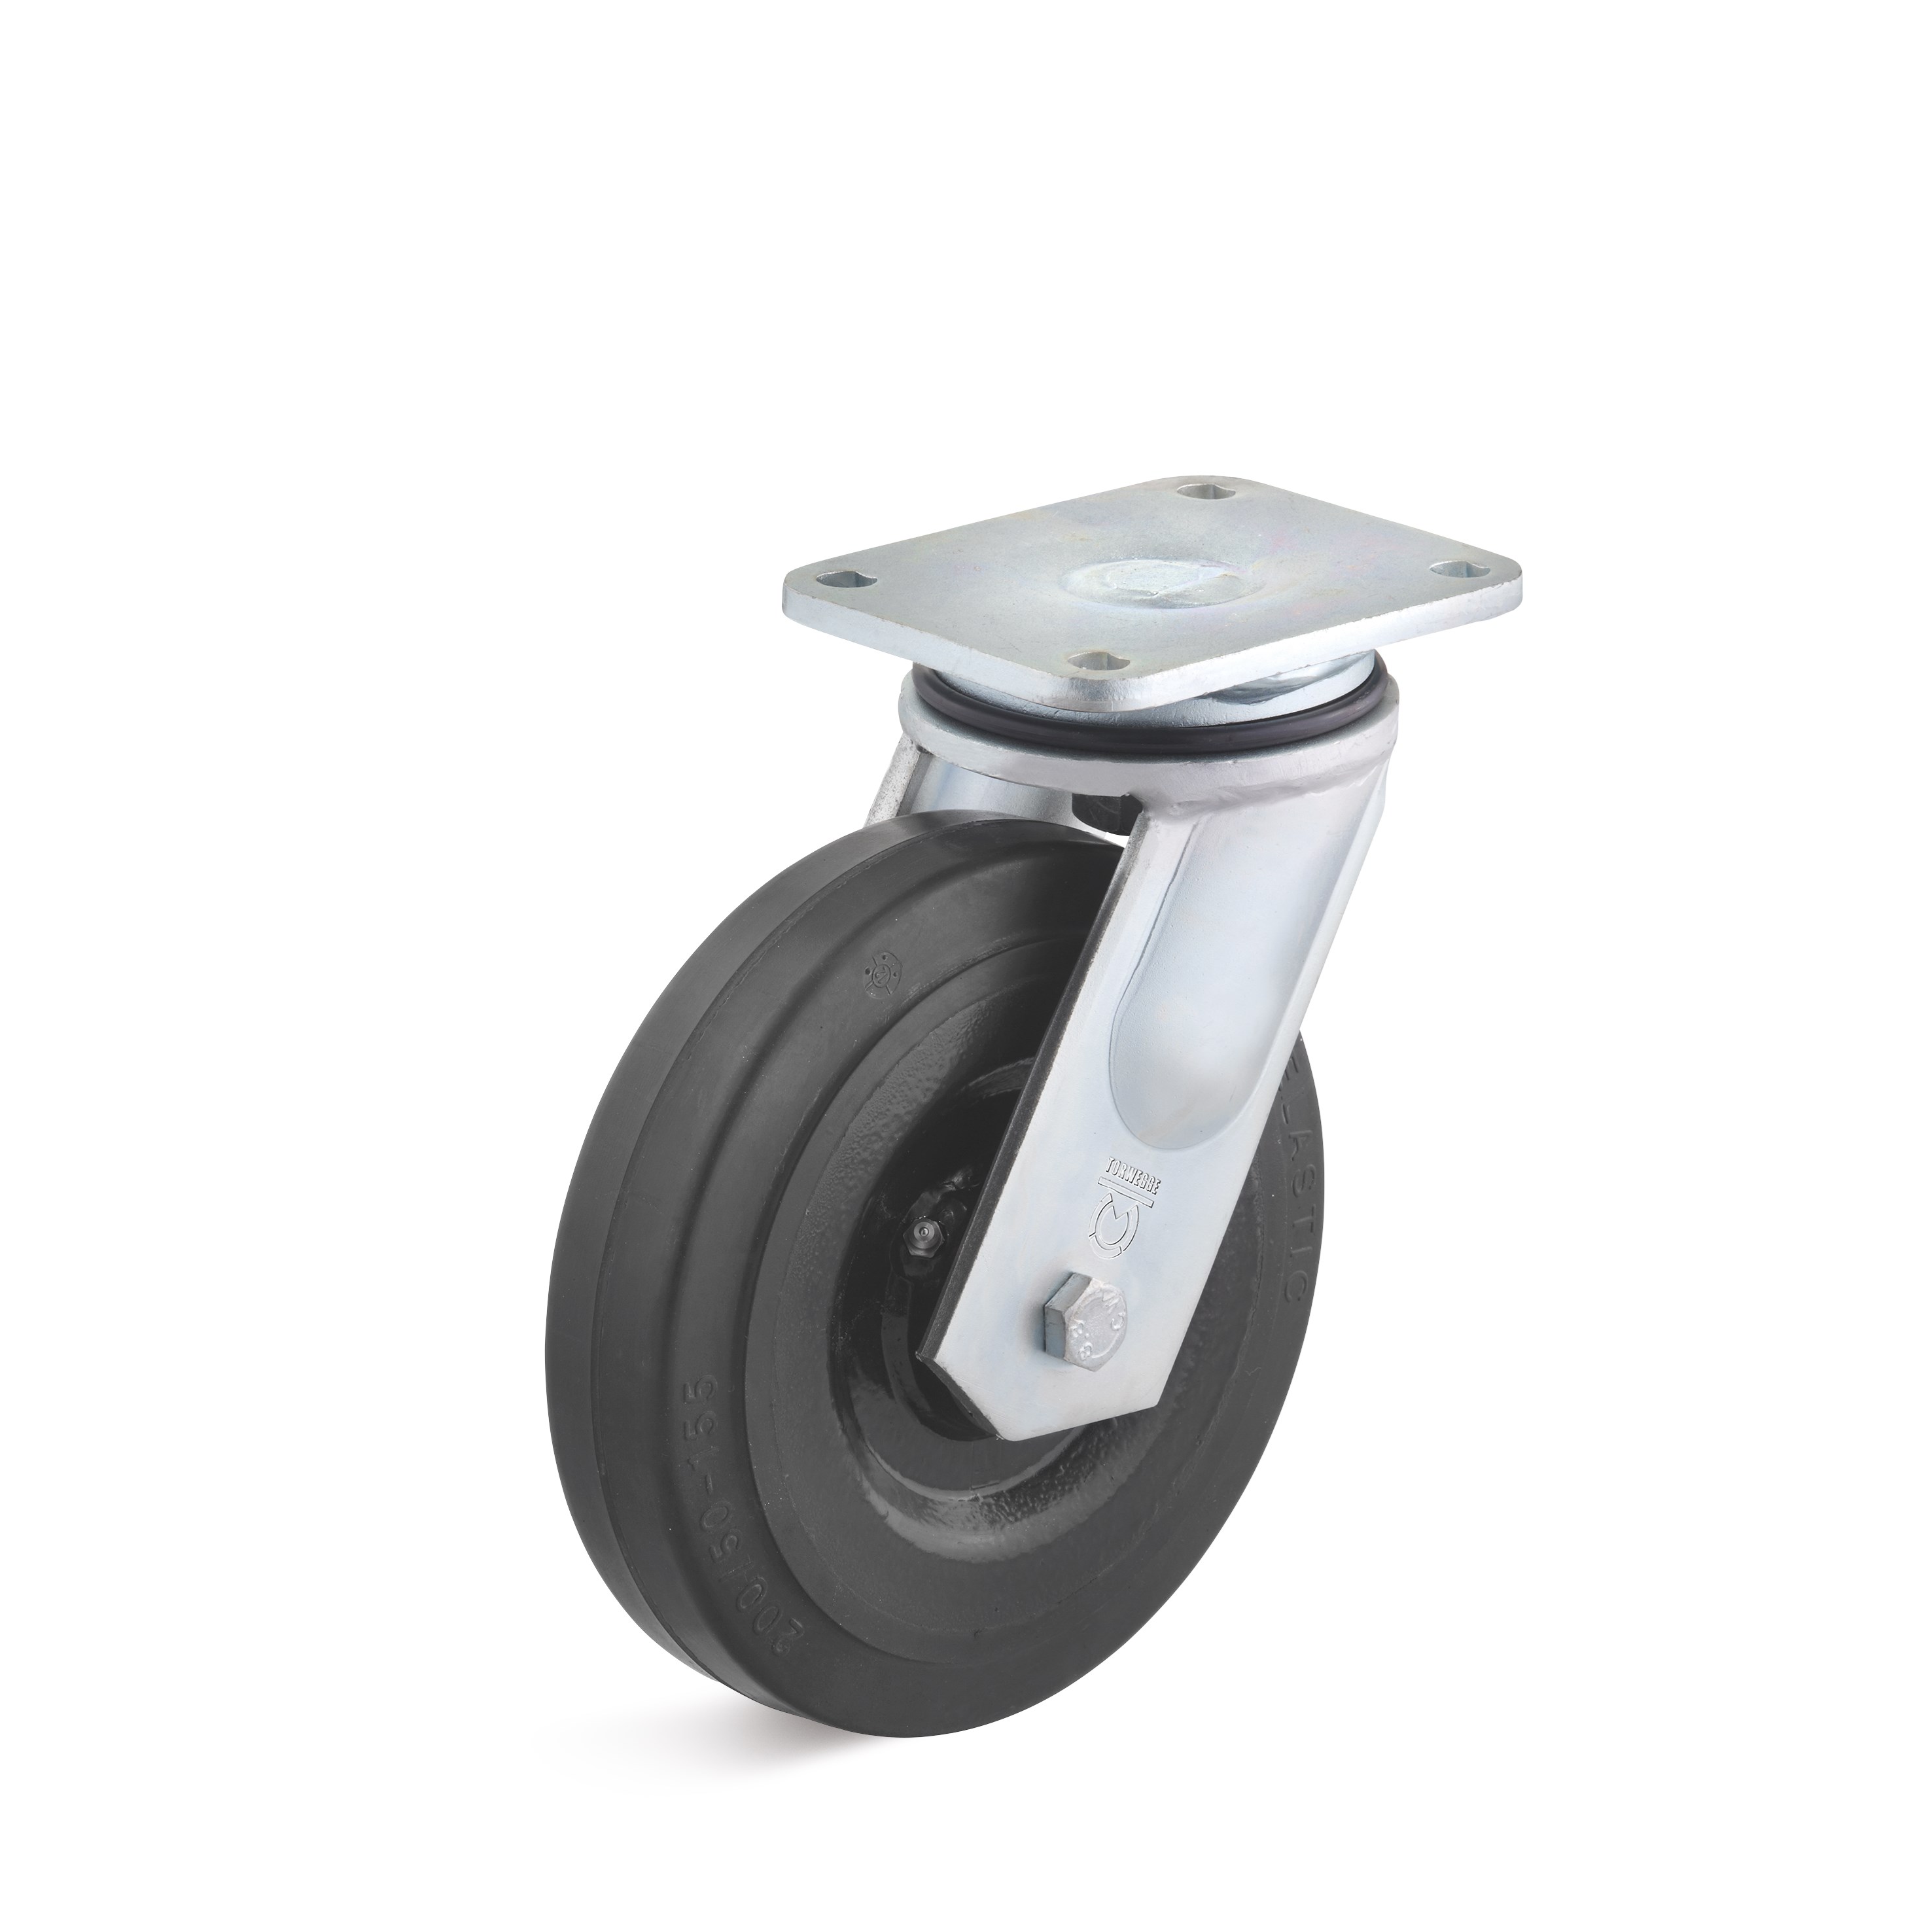 Heavy duty swivel castor with elastic solid rubber wheel